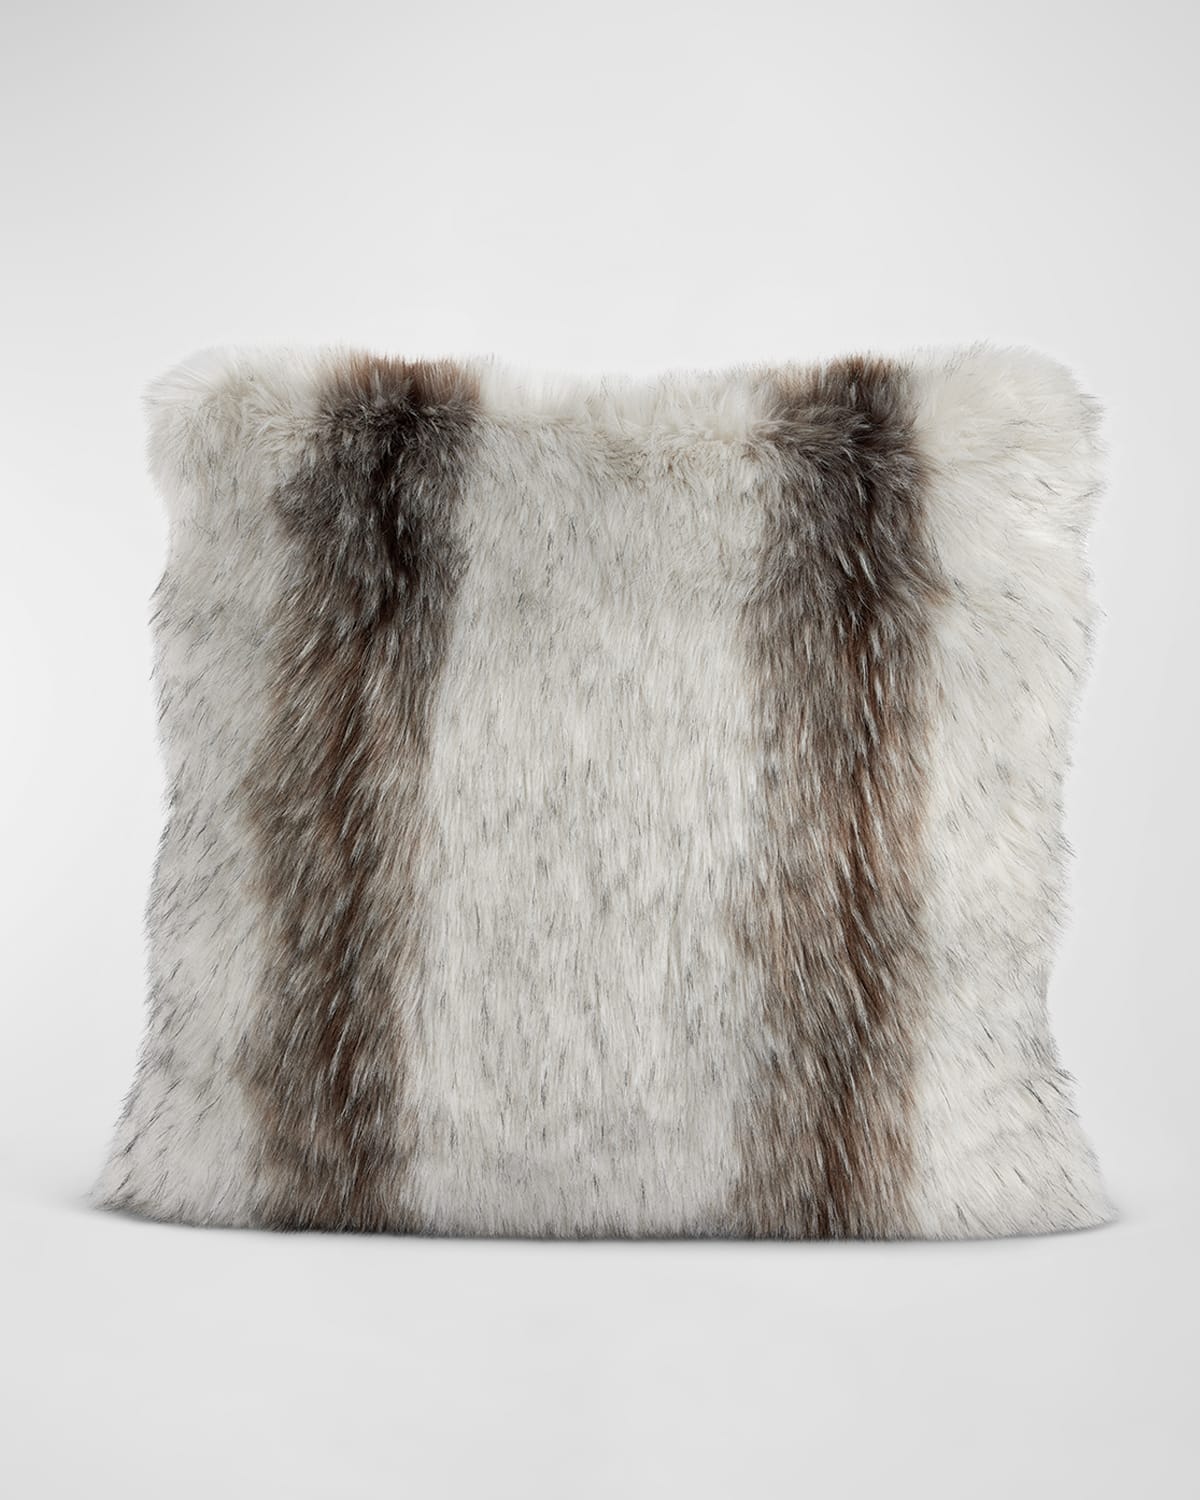 Limited Edition Faux Fur Pillow